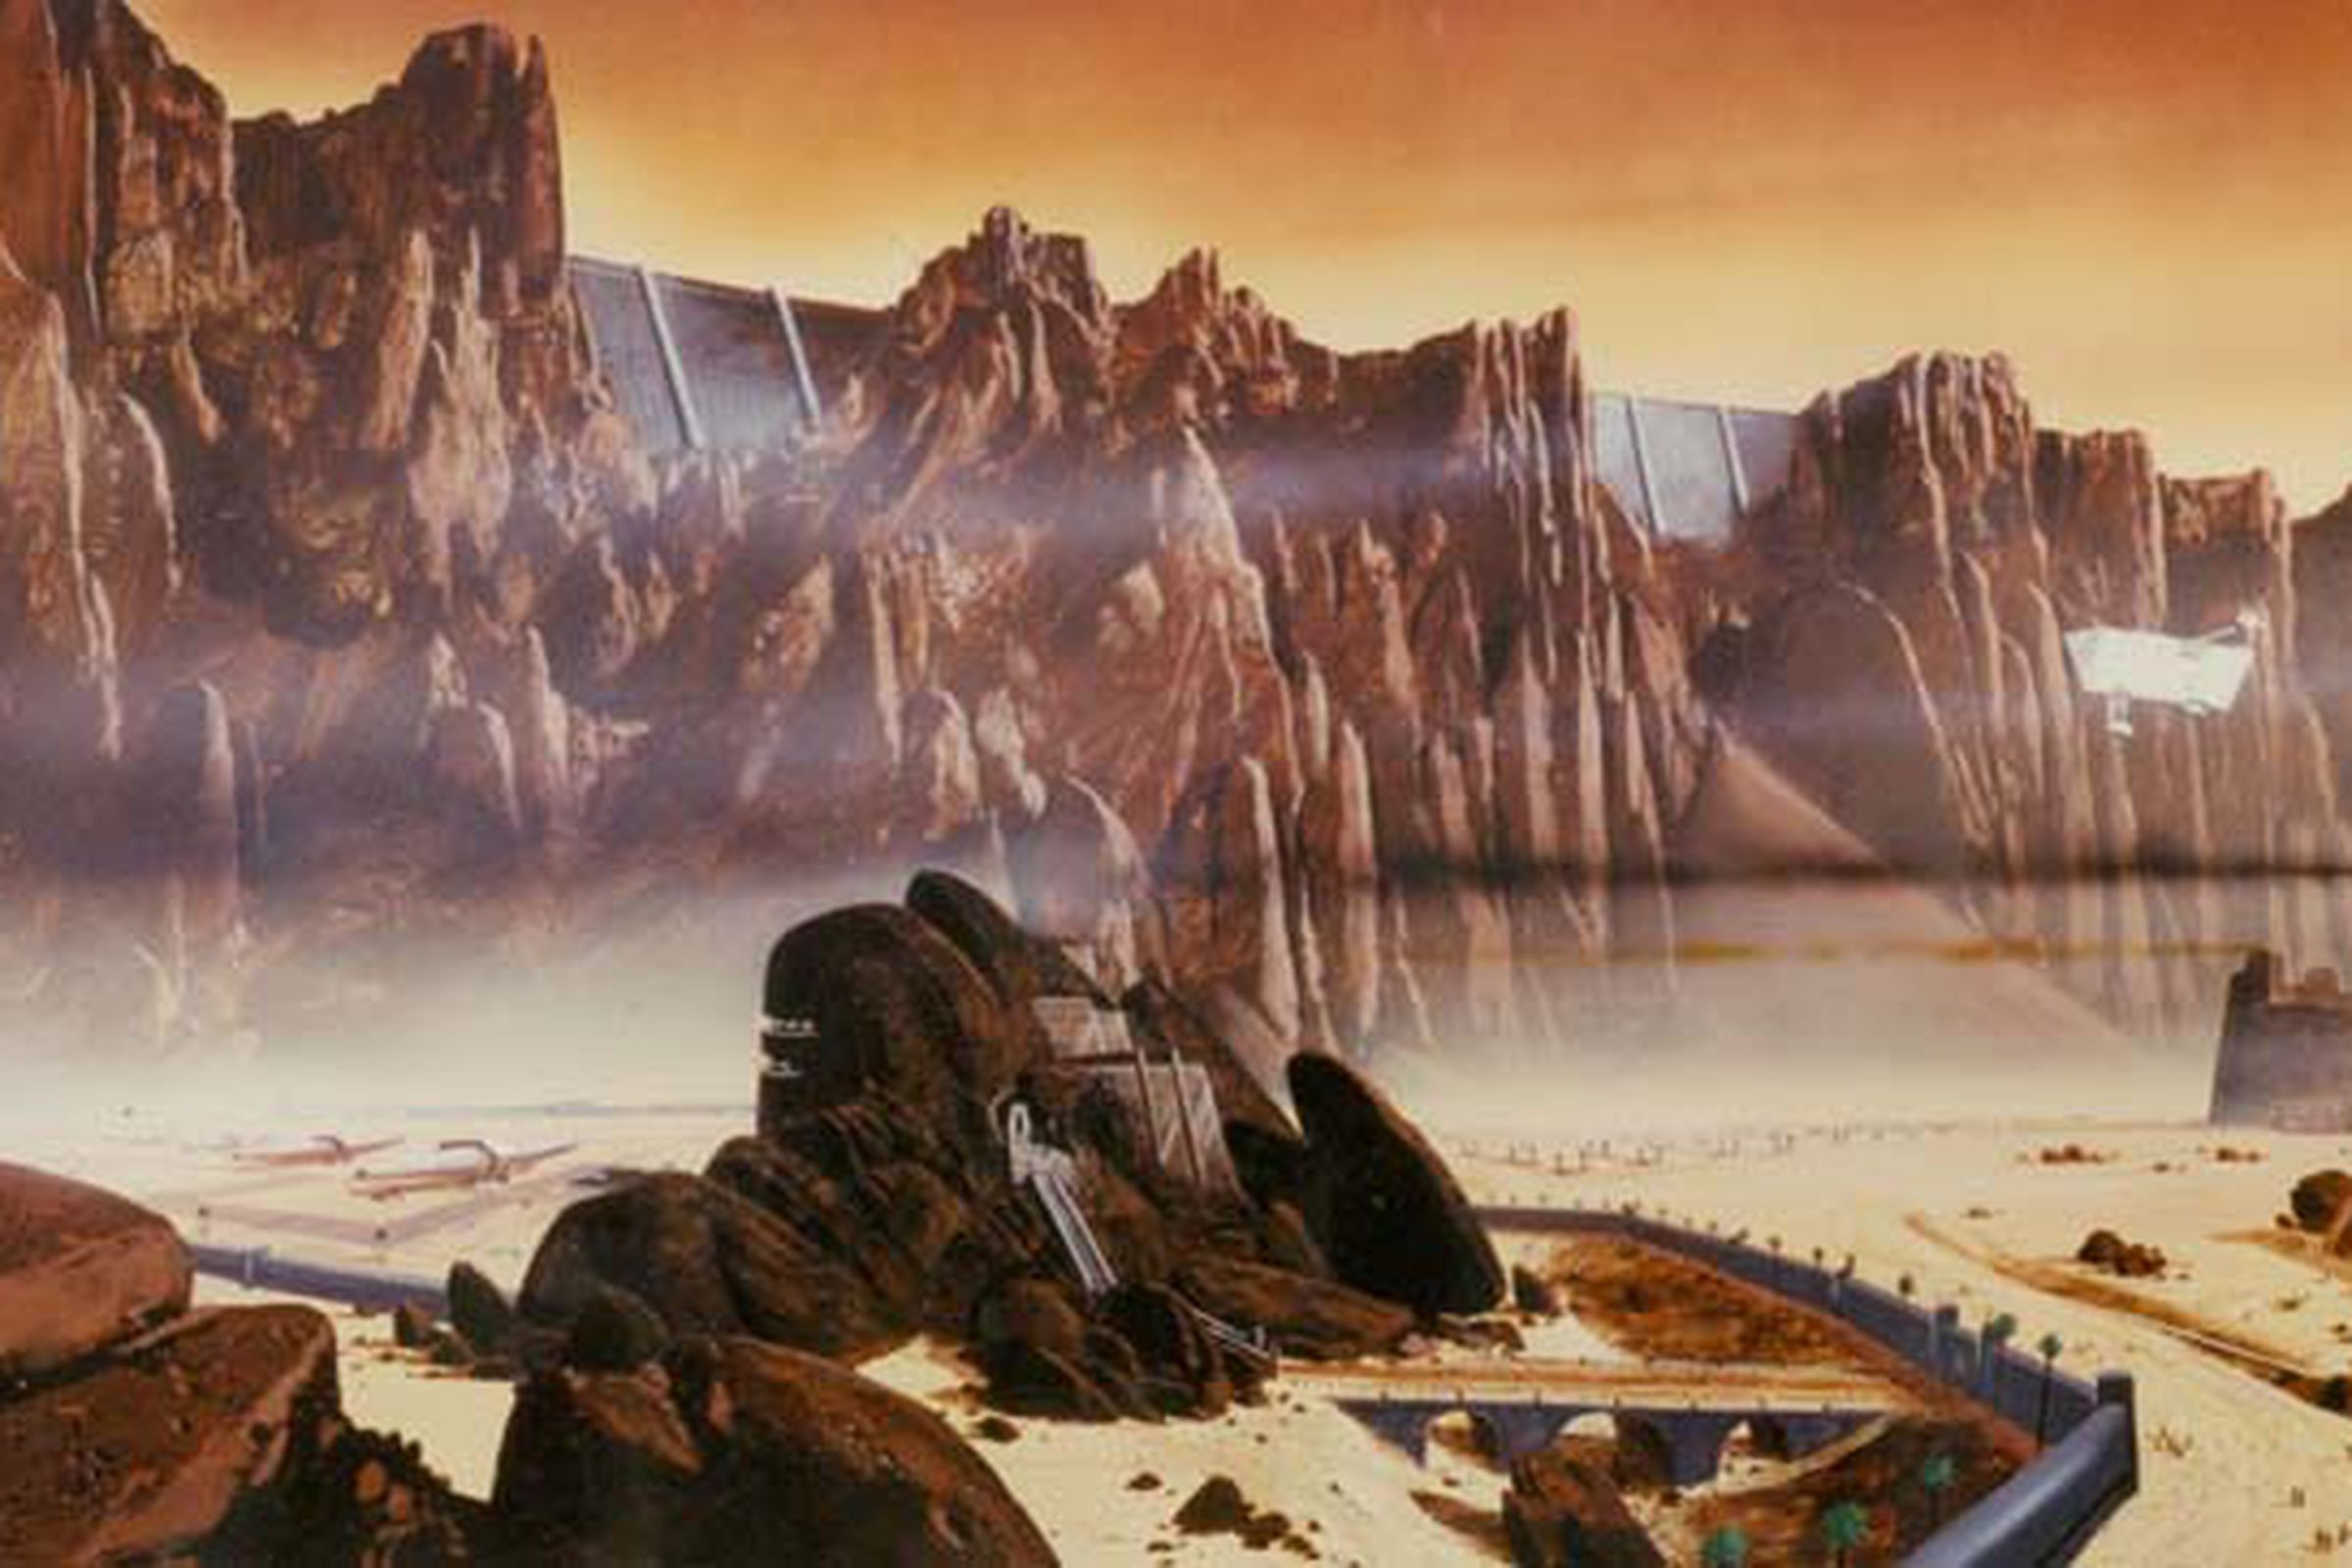 Dune concept art